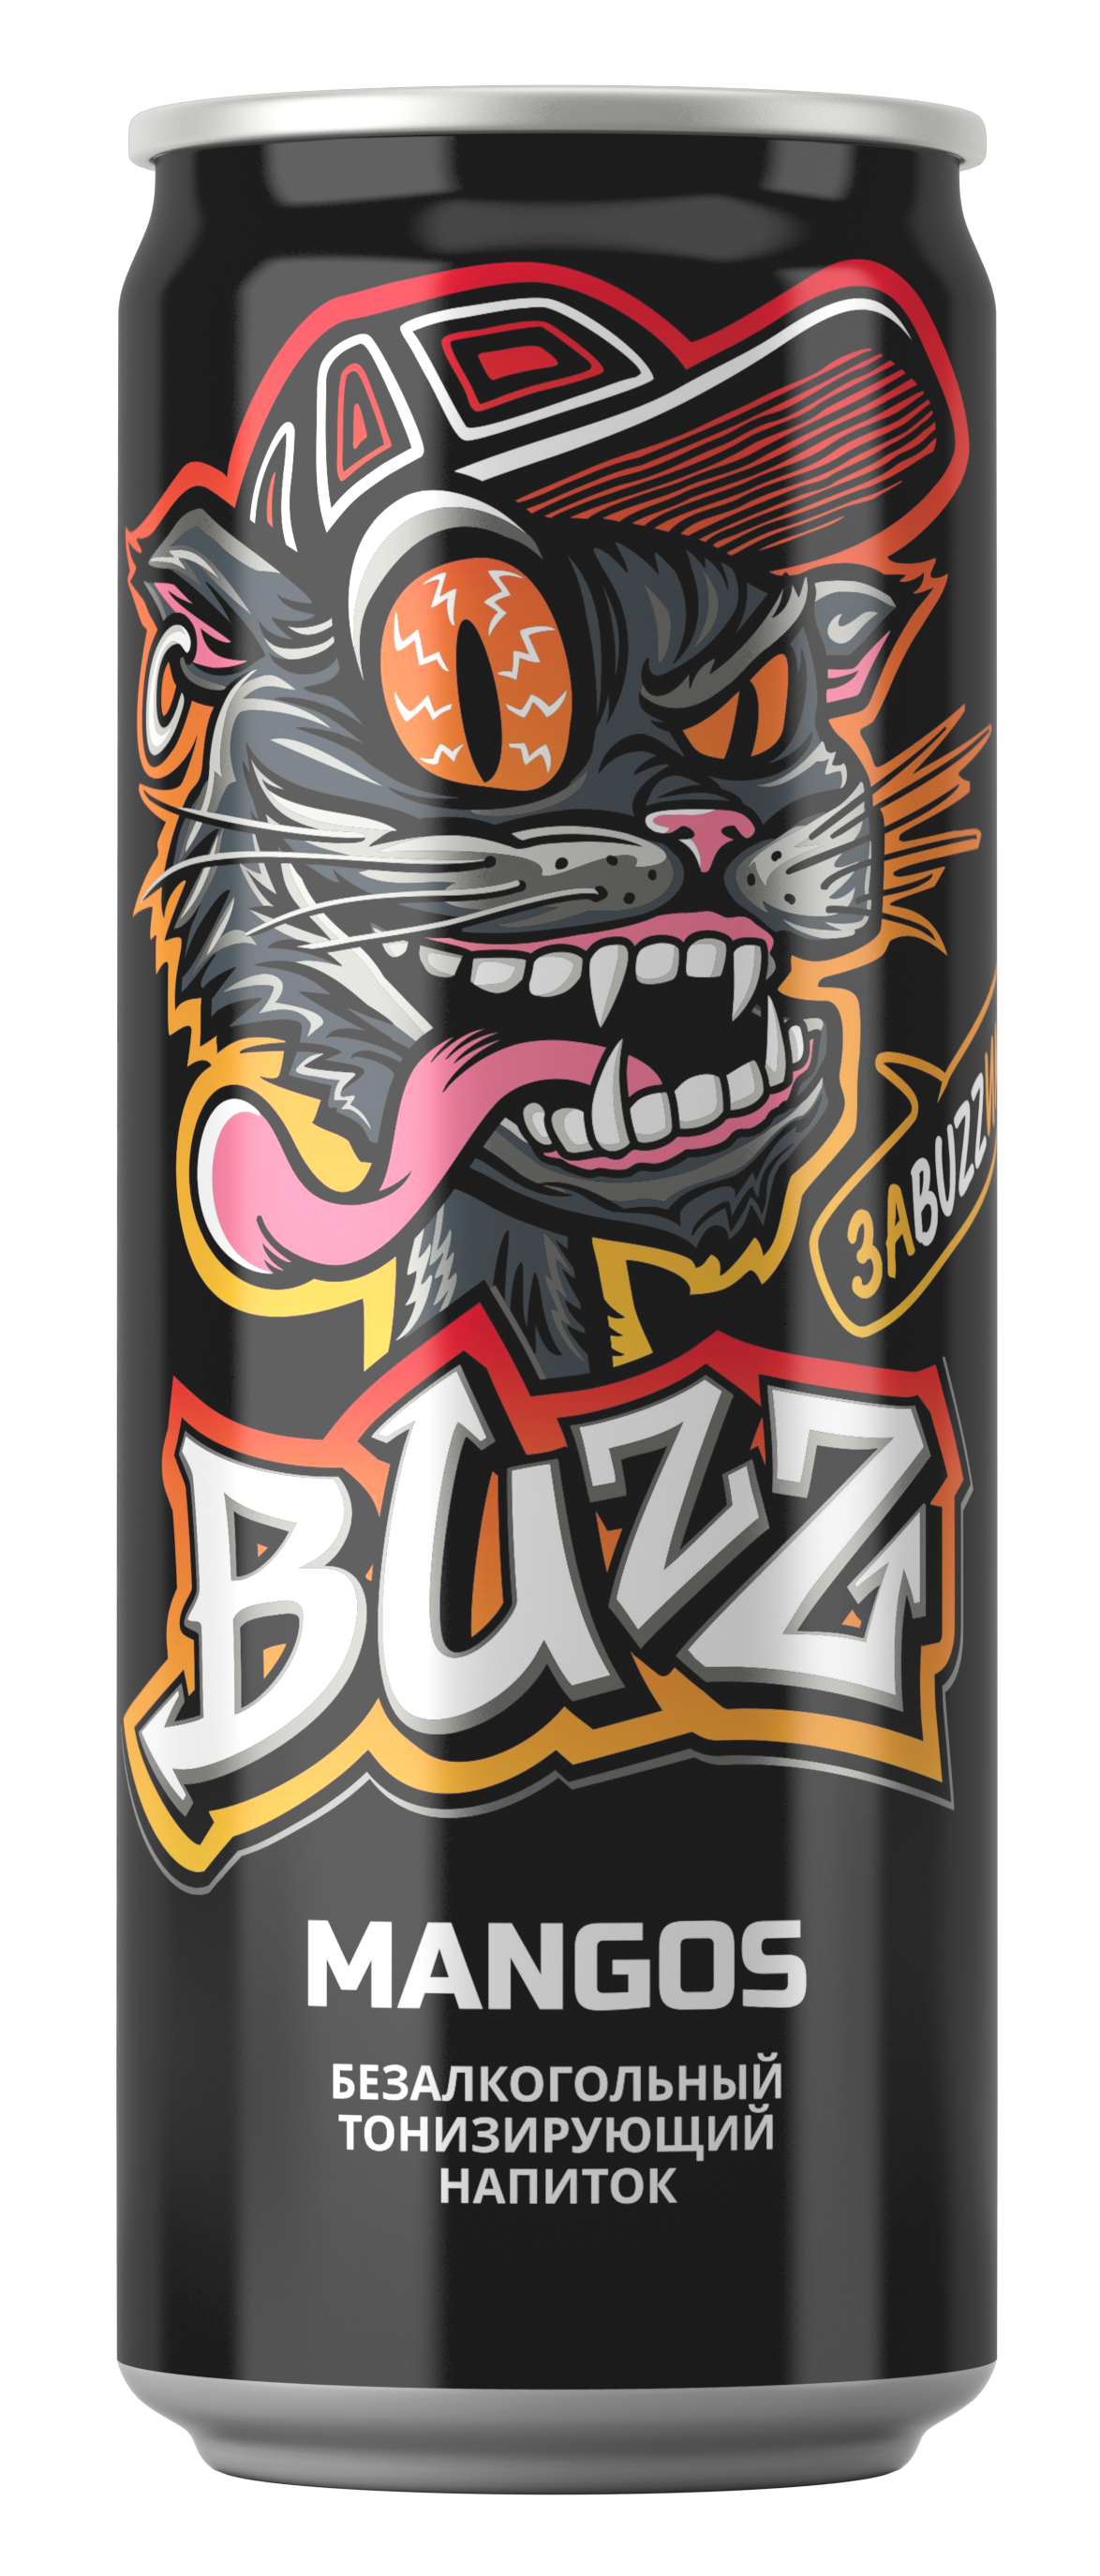 Тонизирующий напиток «BUZZ» - MANGOS